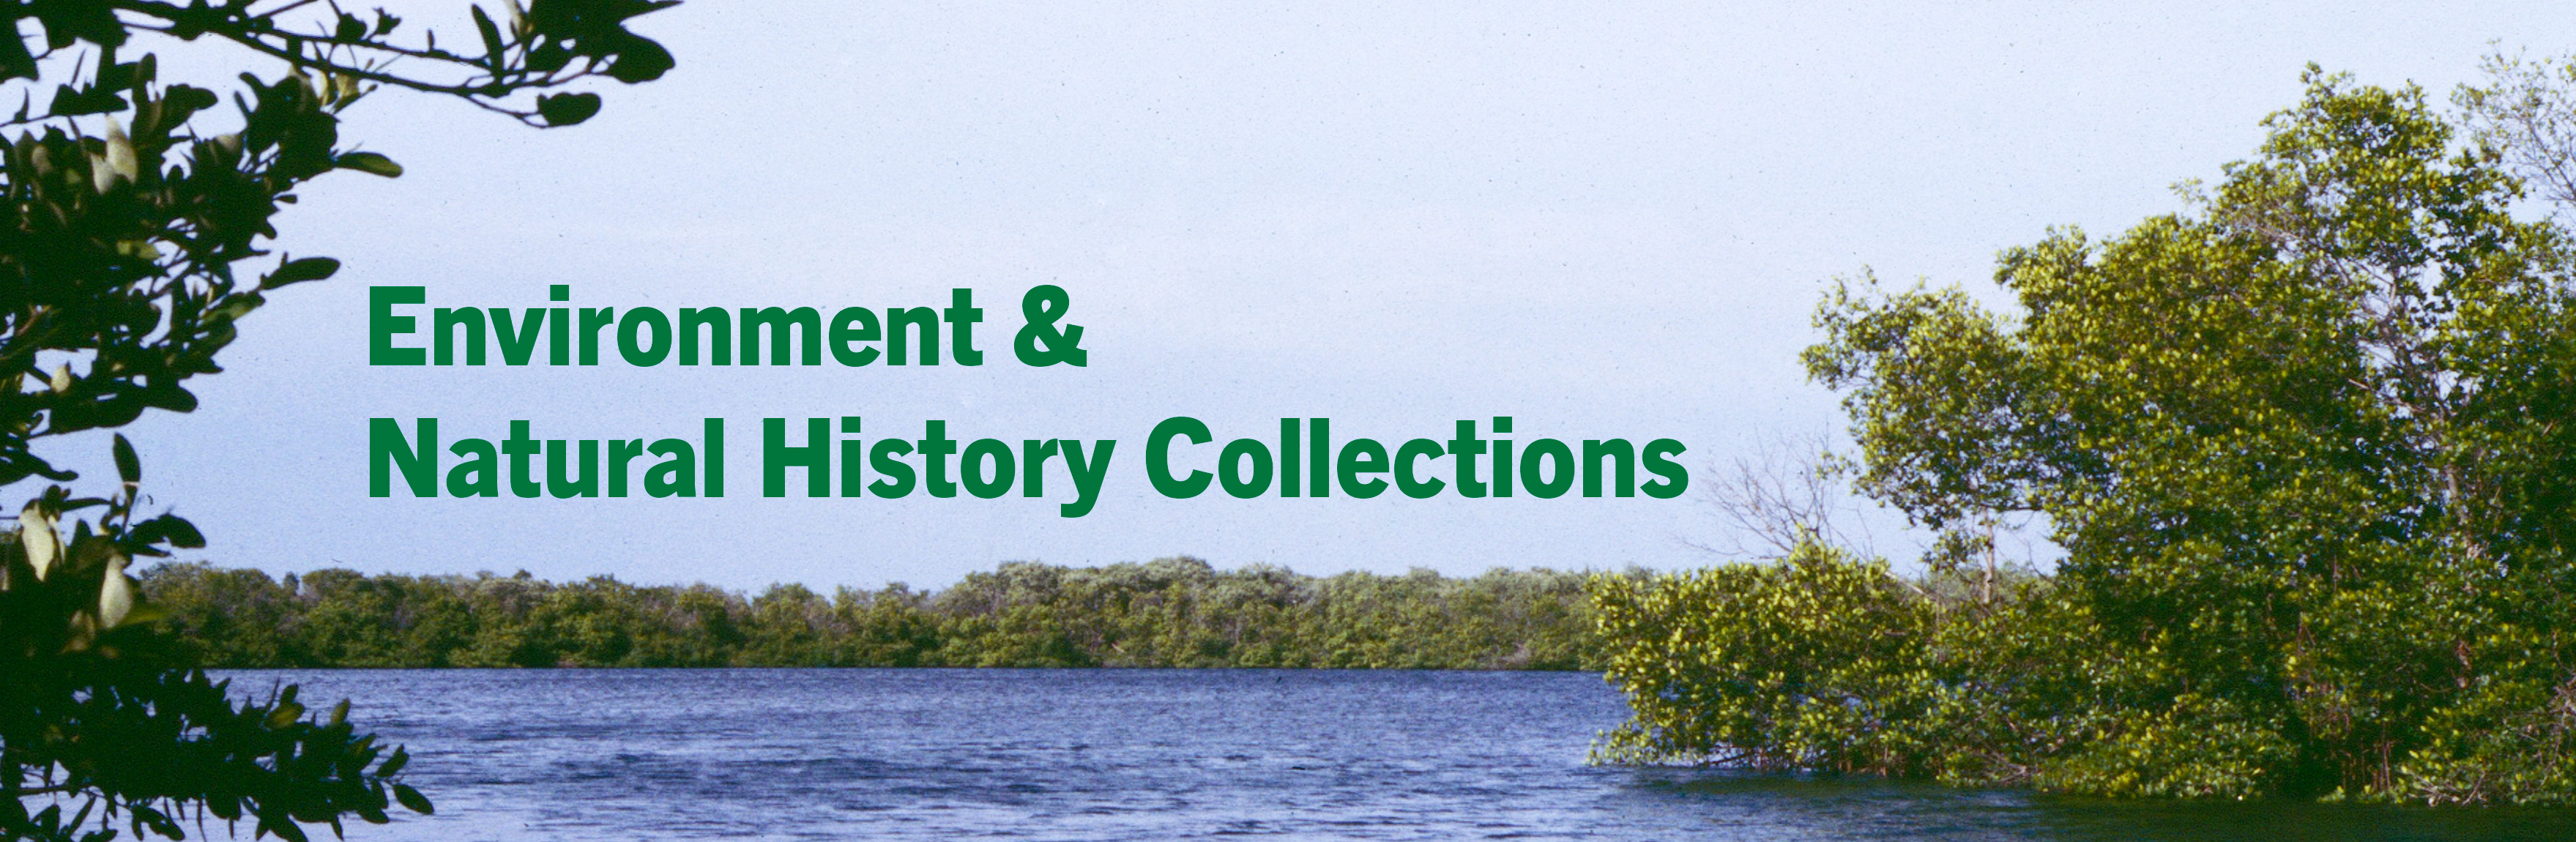 Forest Preserve Publications